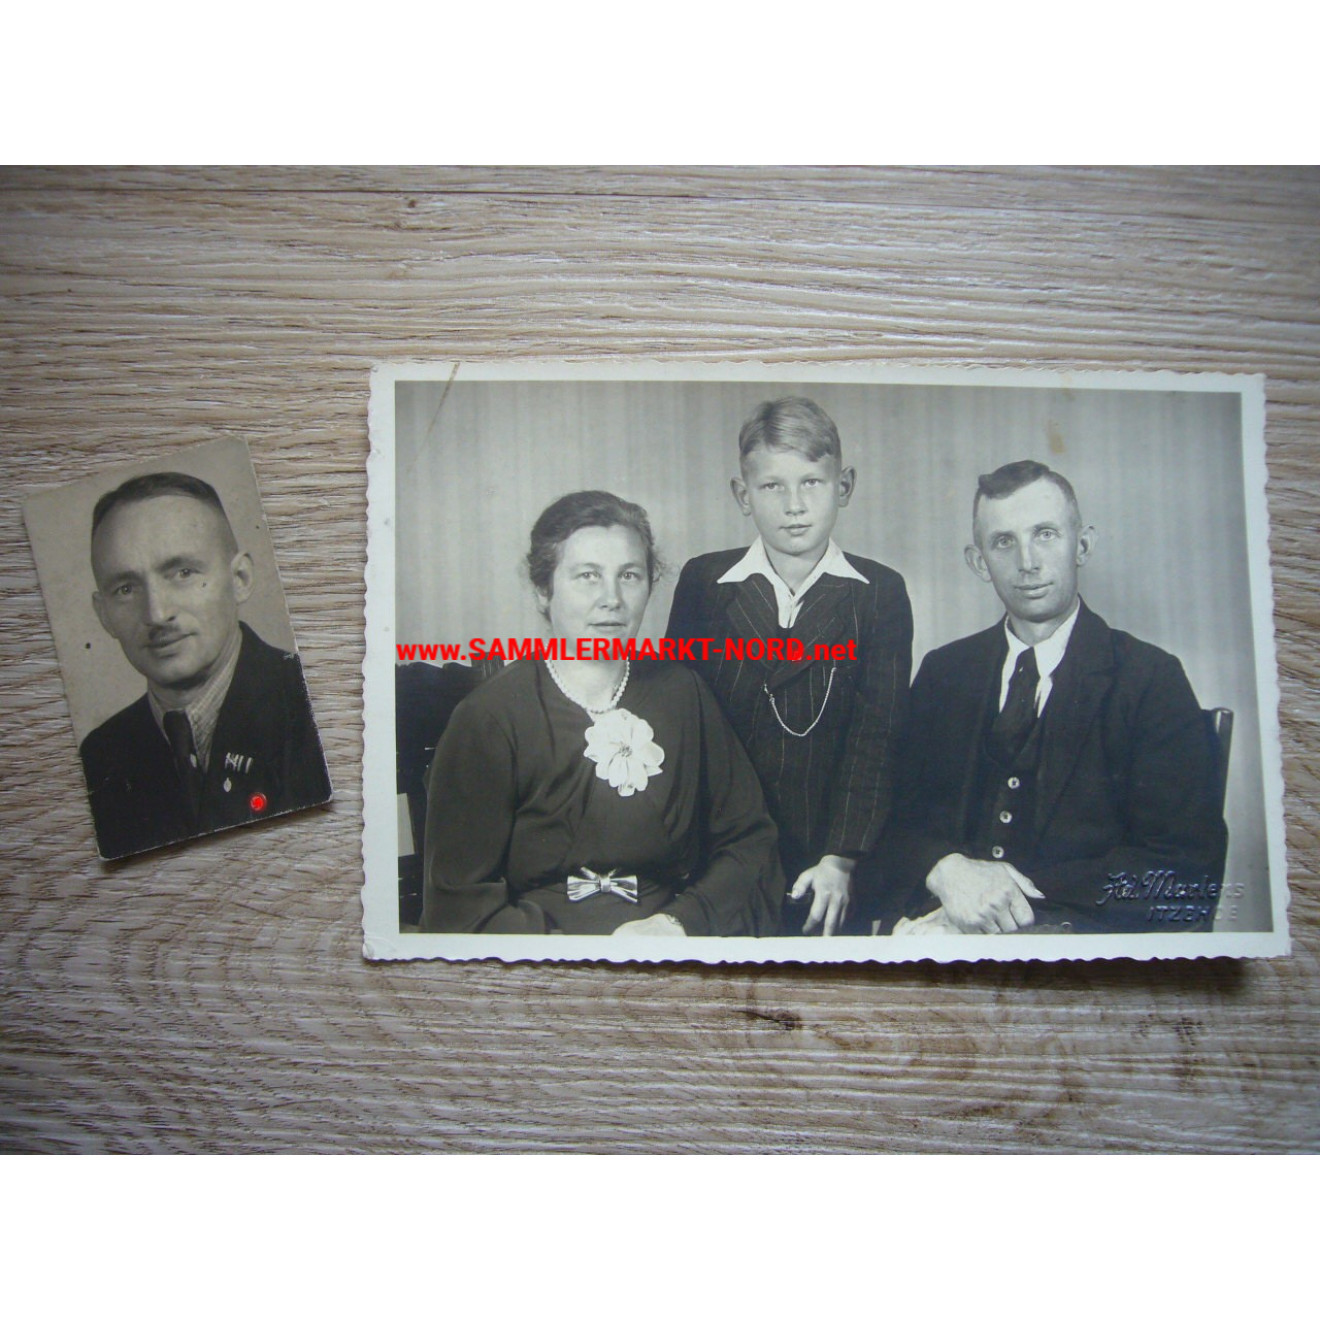 2 x portrait photo boy and man with HJ & NSDAP membership badge